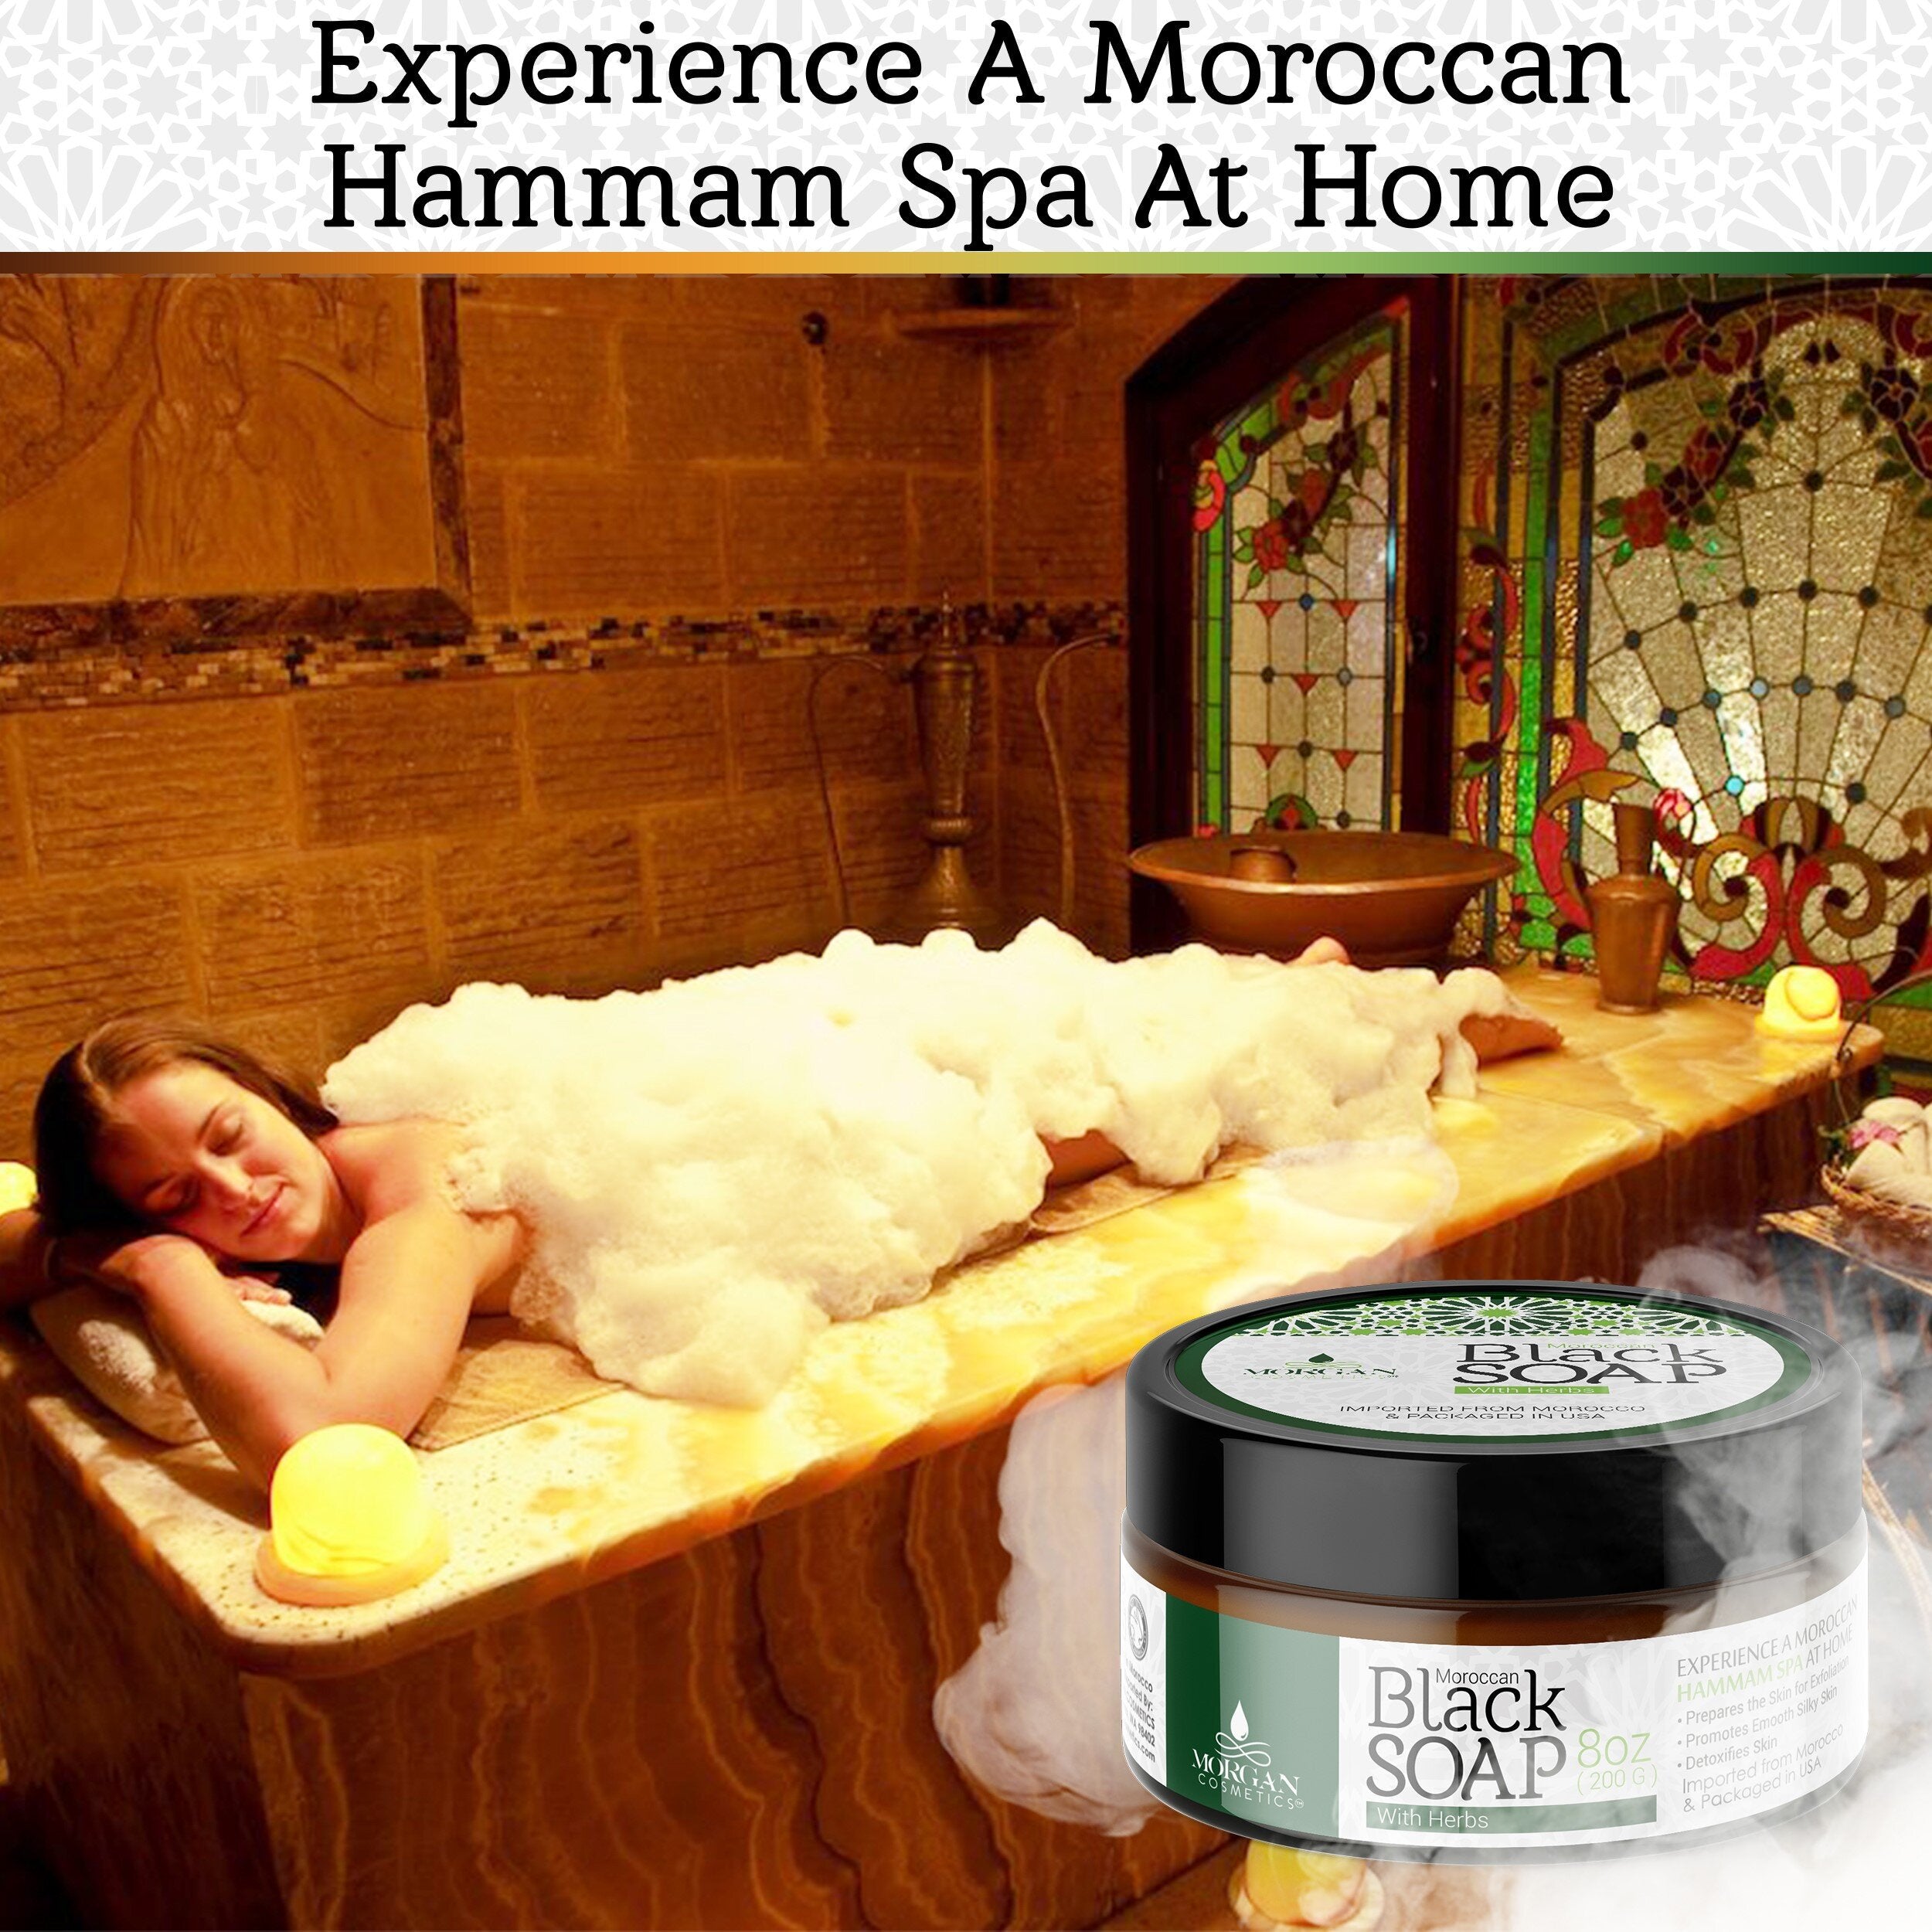 Moroccan Black Soap with Argan freeshipping - morgancosmeticsofficial